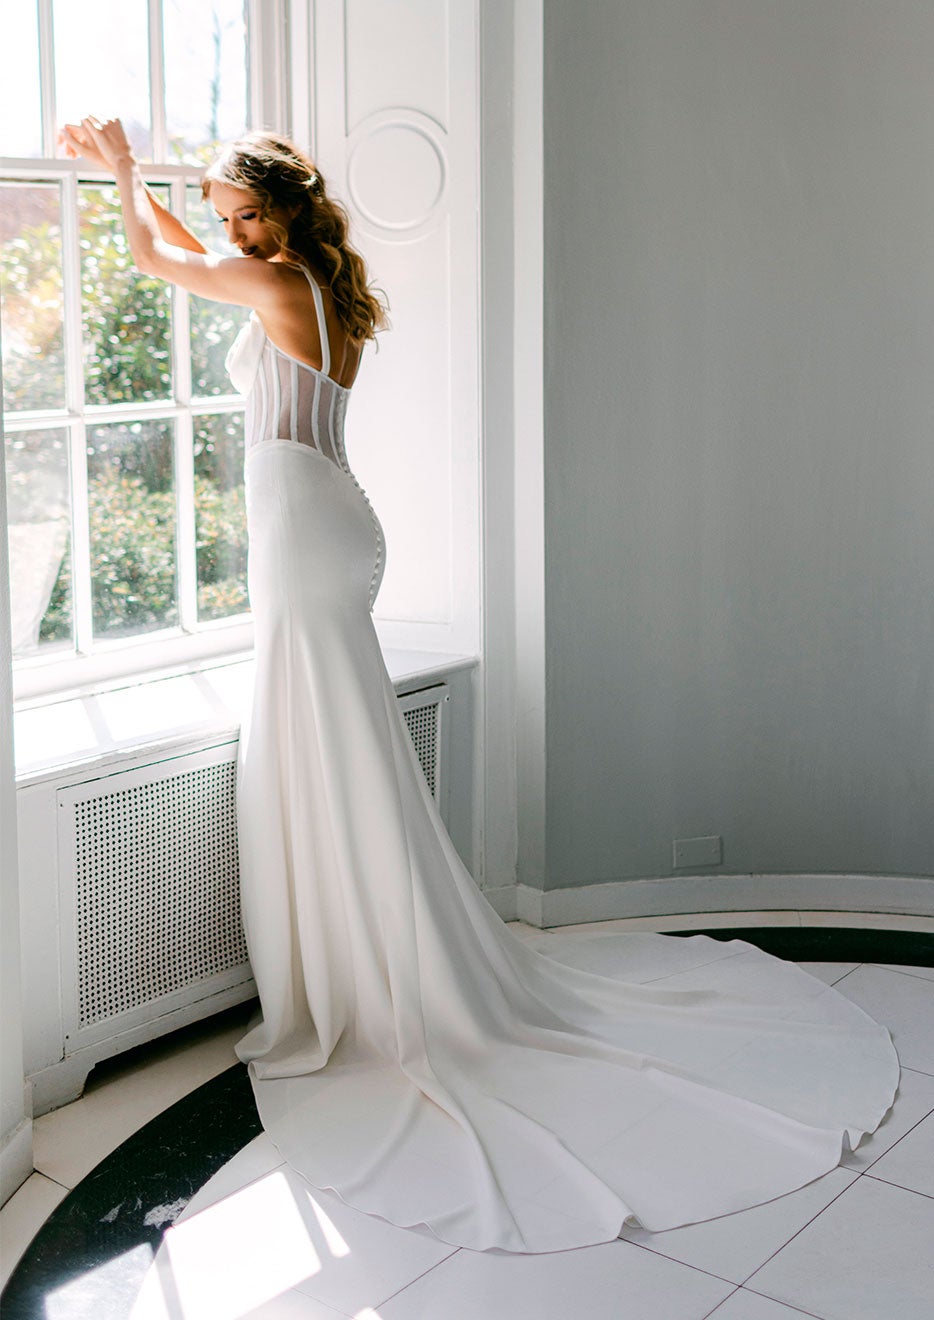 Sleeveless Sheath Wedding Dress With Exposed Boned Bodice by Verdin Bridal New York - Image 2